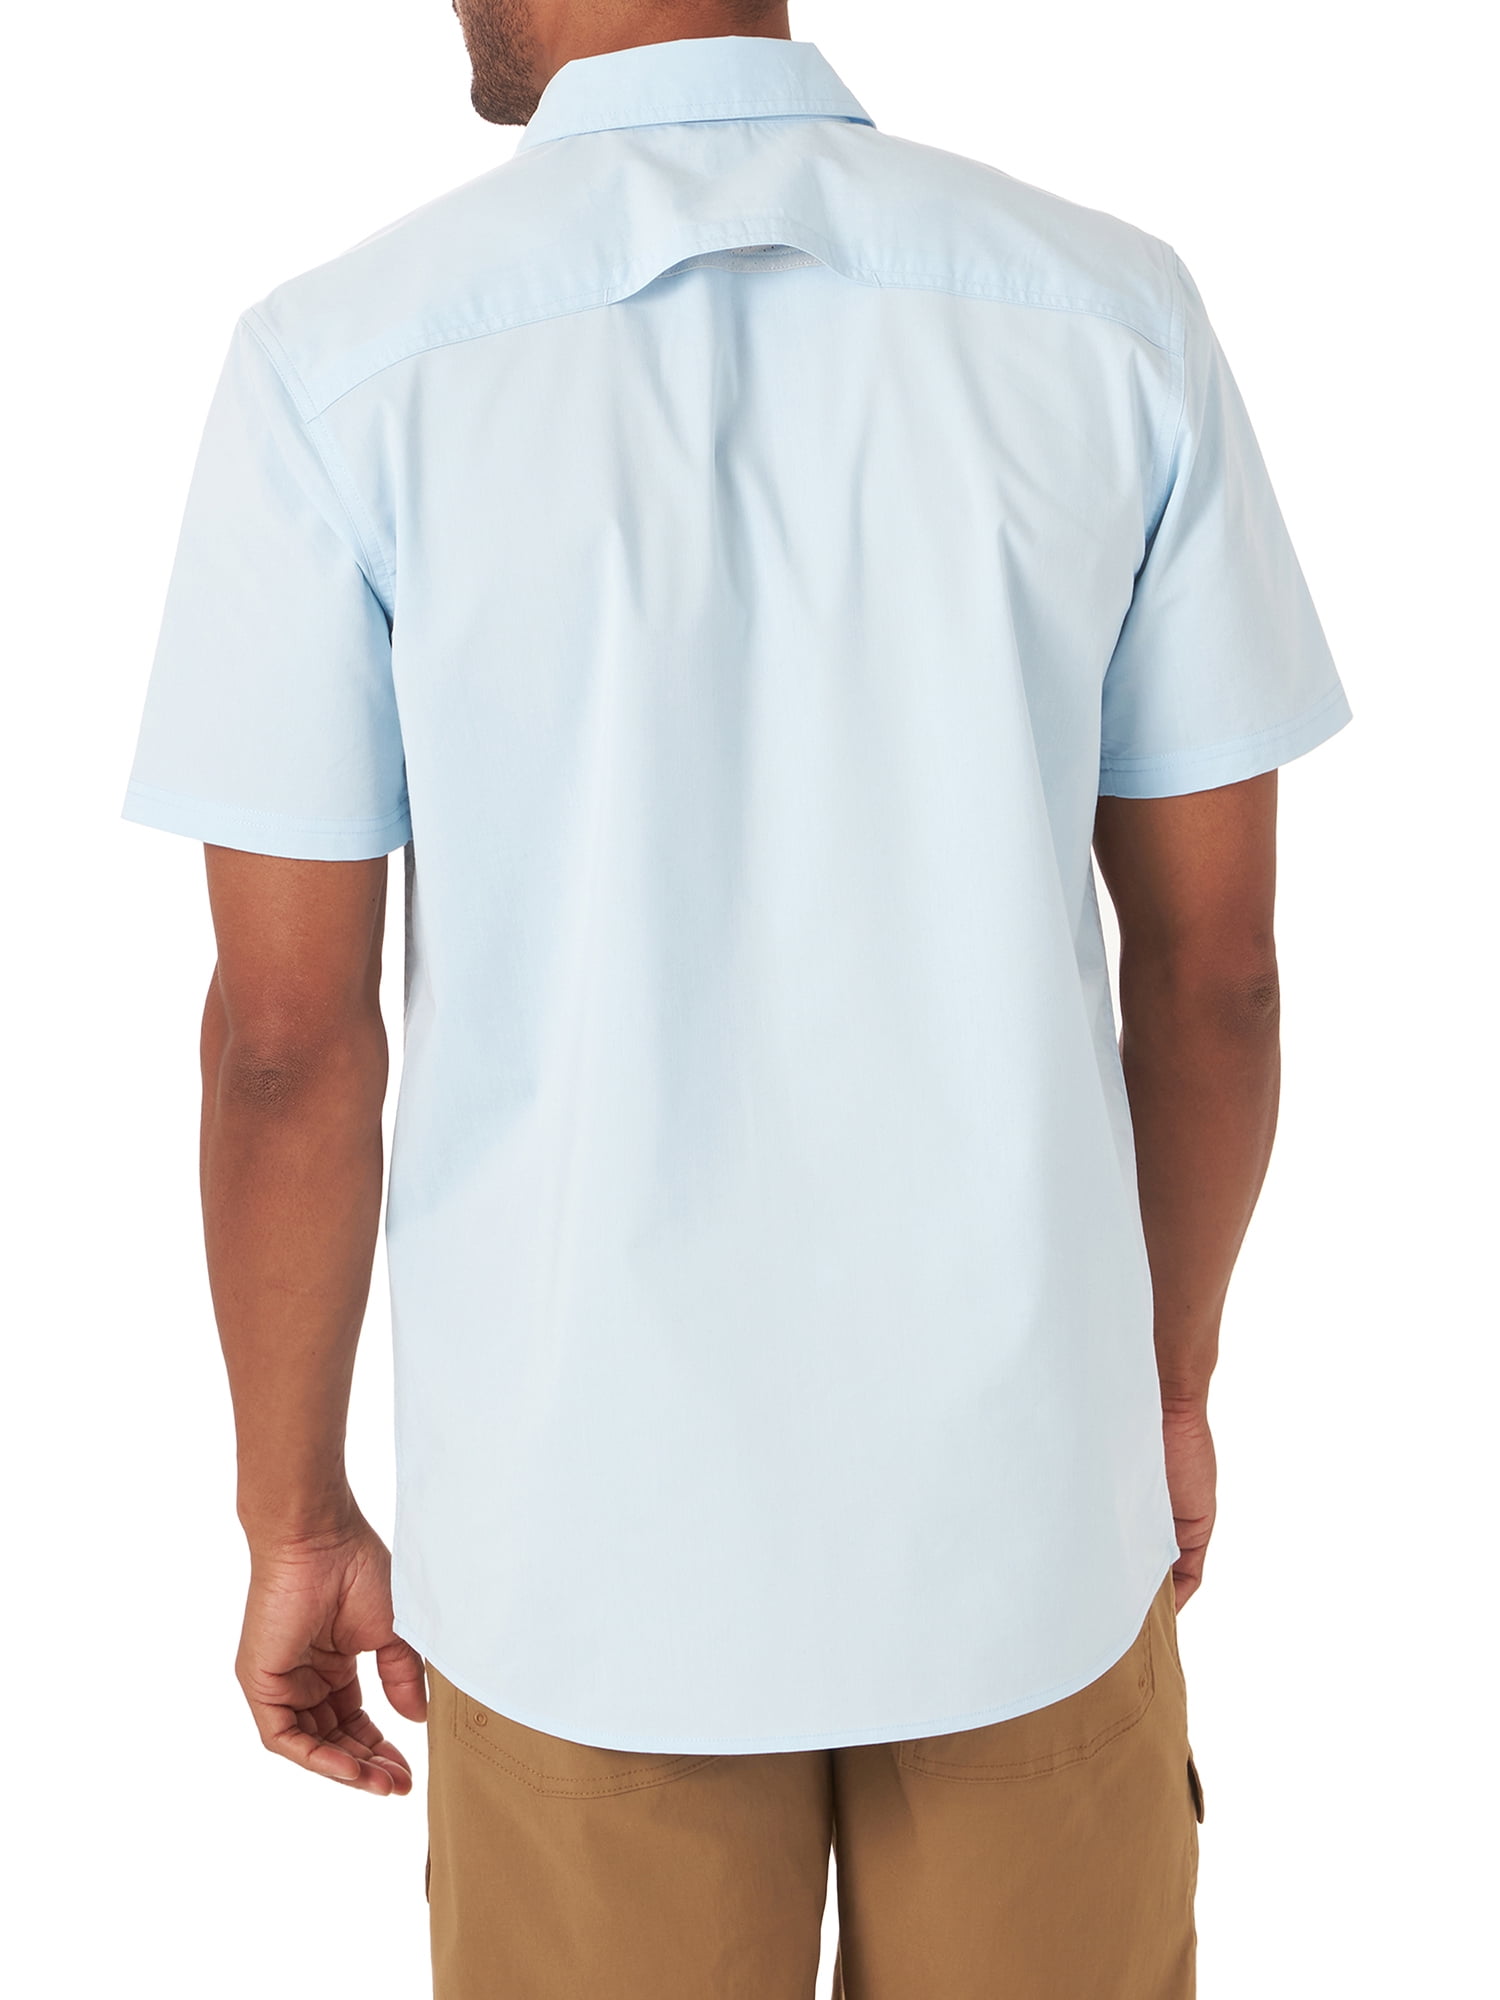 Casa Moda Premium Cotton Comfort Fit Short Sleeve Print Shirt in Size XXL to 6XL 